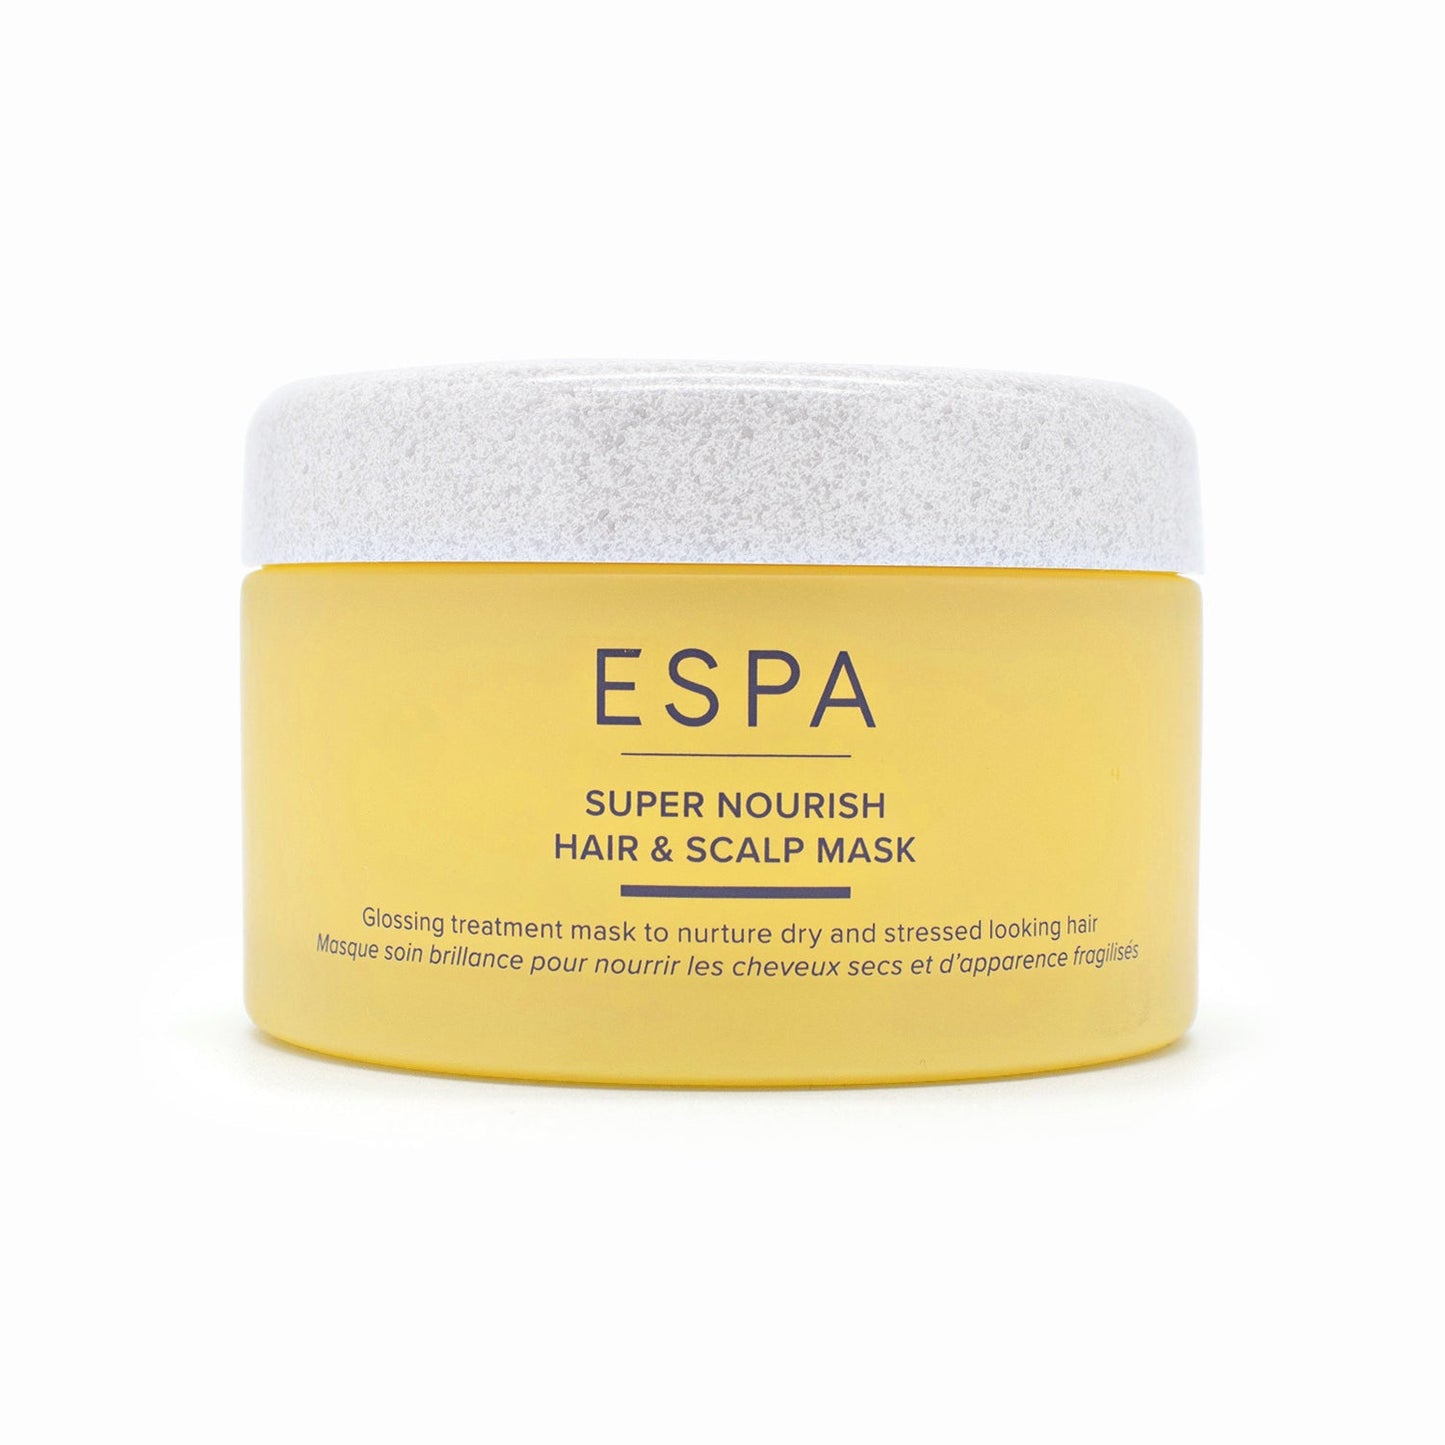 ESPA Super Nourish Hair & Scalp Mask 6.4oz - Missing Box